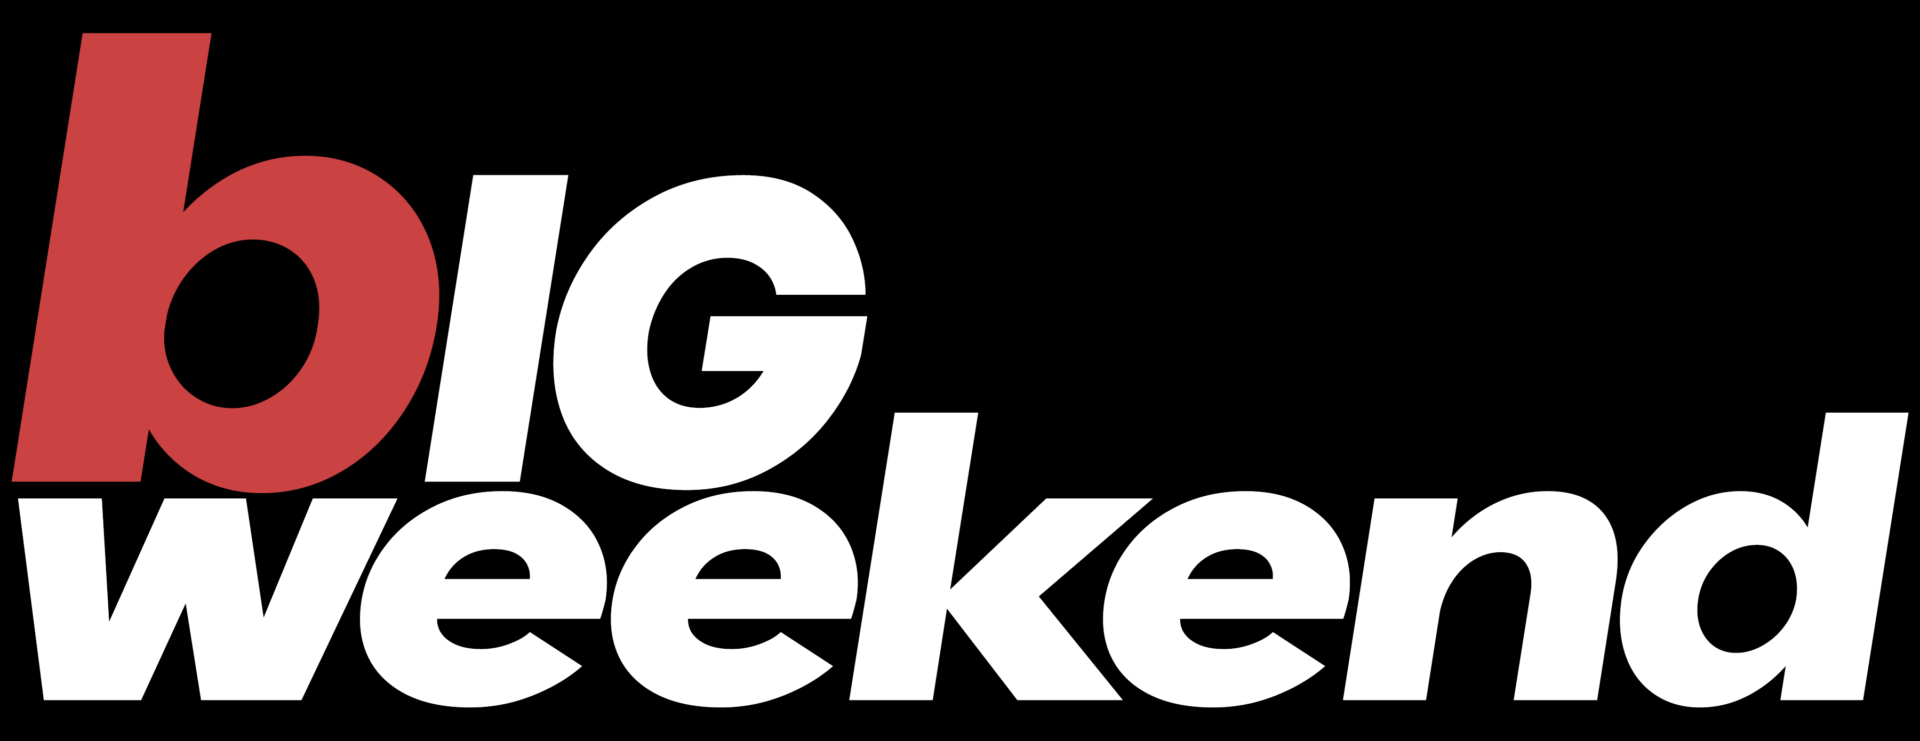 Big Weekend Logo1 copy